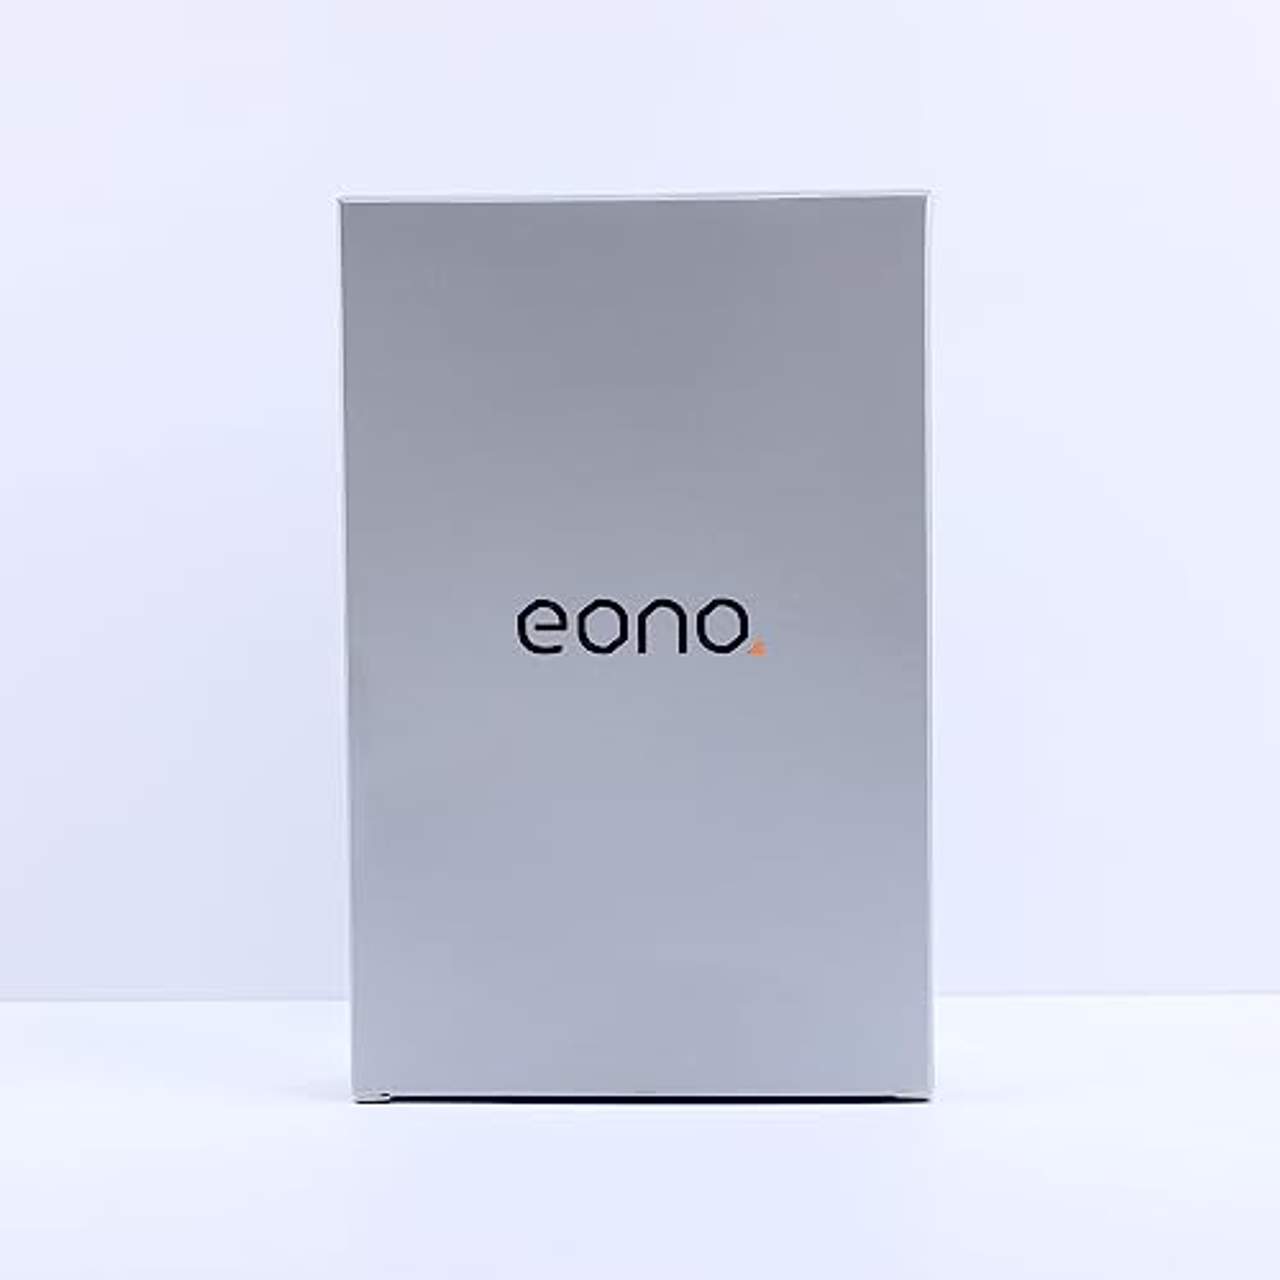 Eono Amazon Brand